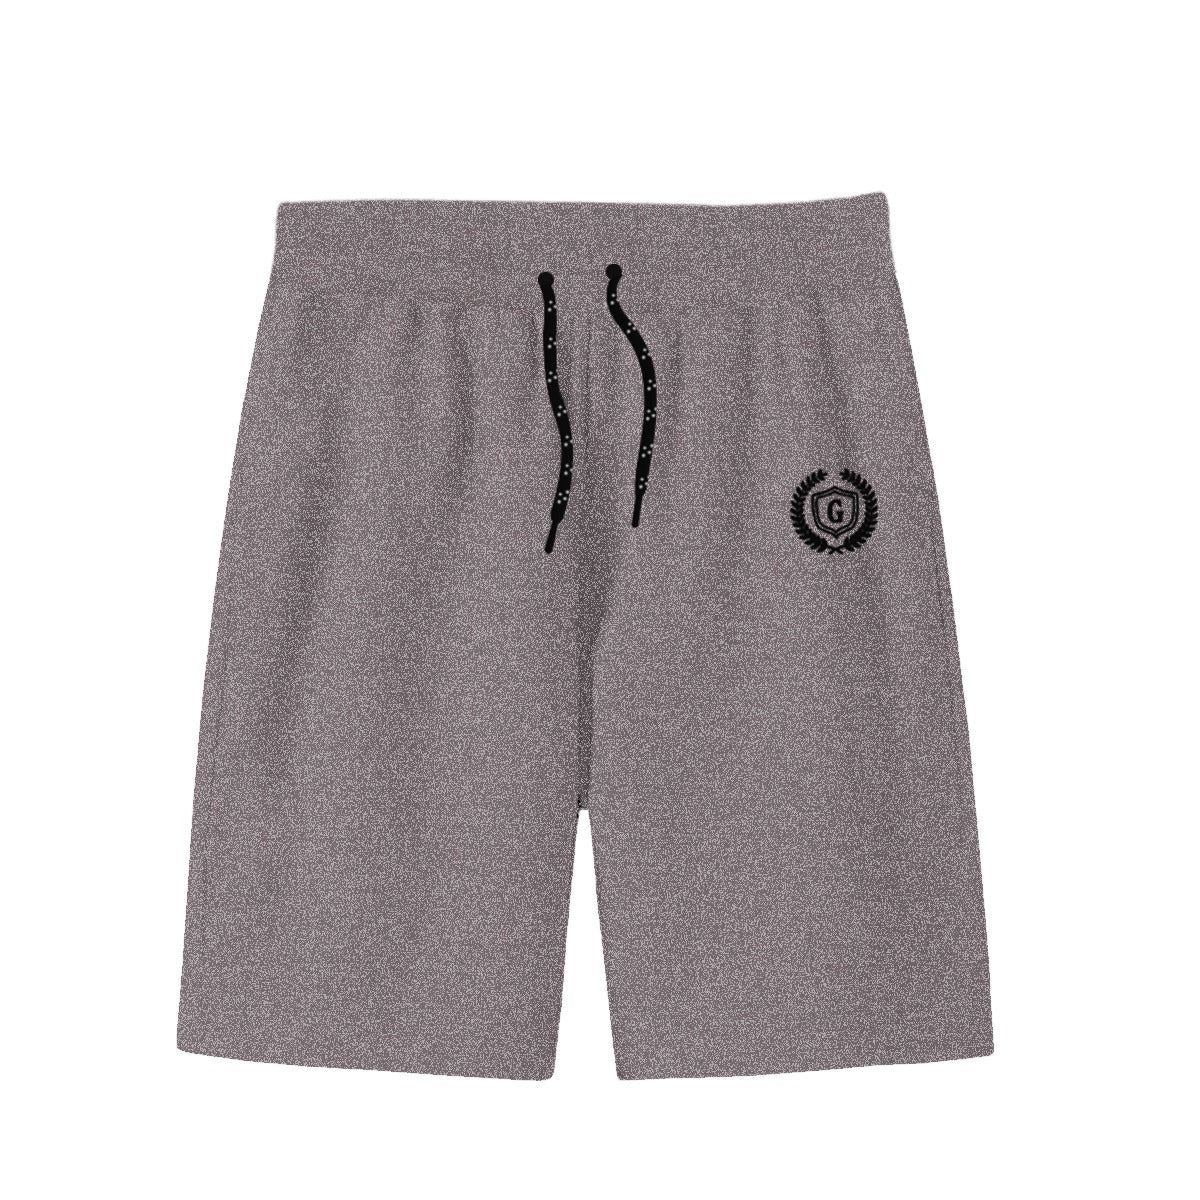 HG Signature Emb Three Quarter Shorts | Textured Pattern | Purple Brown